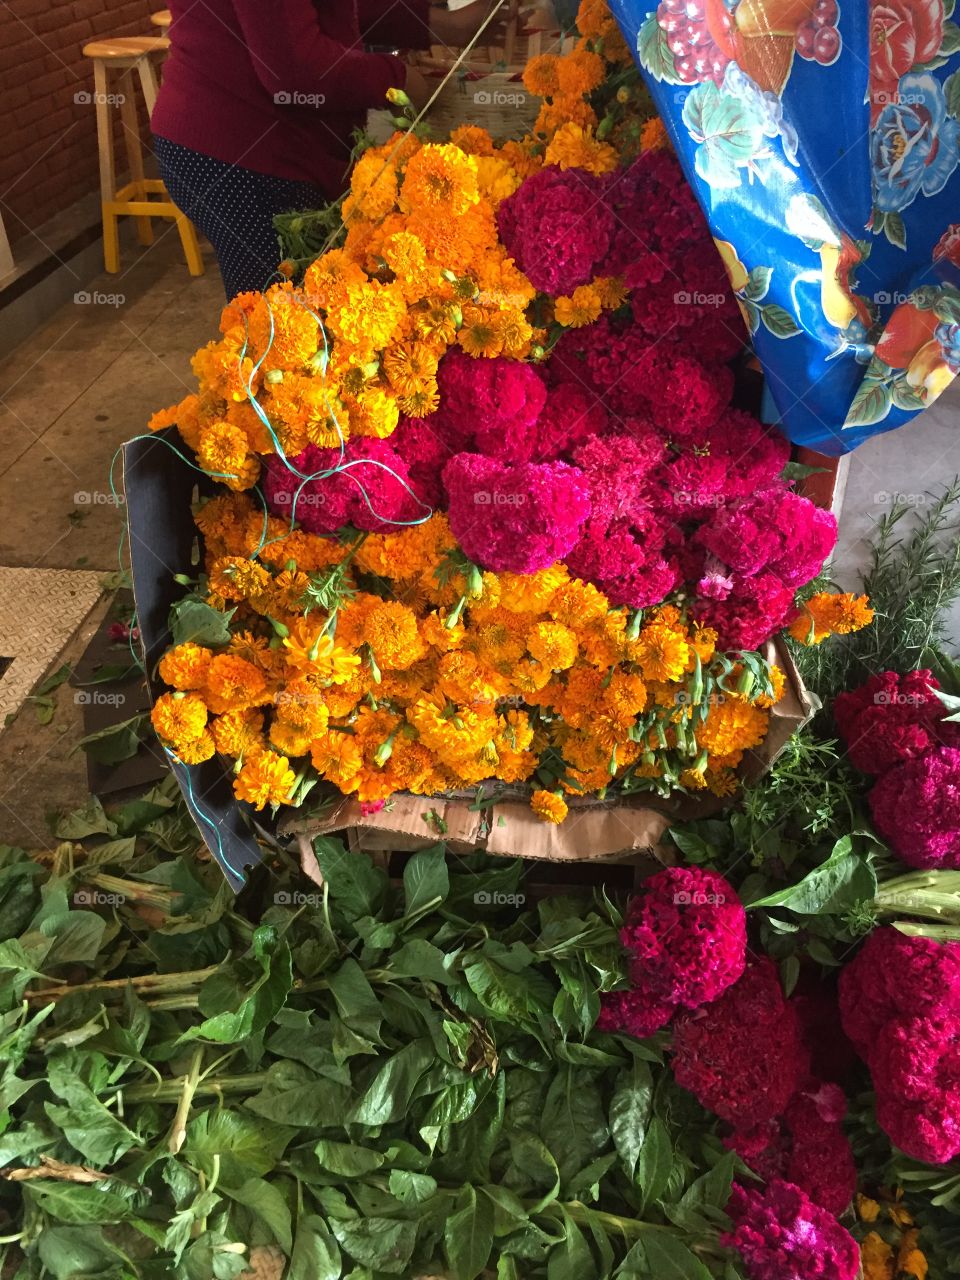 Carnations at the market for Dia de los Muertes, Oaxaca, Mexico